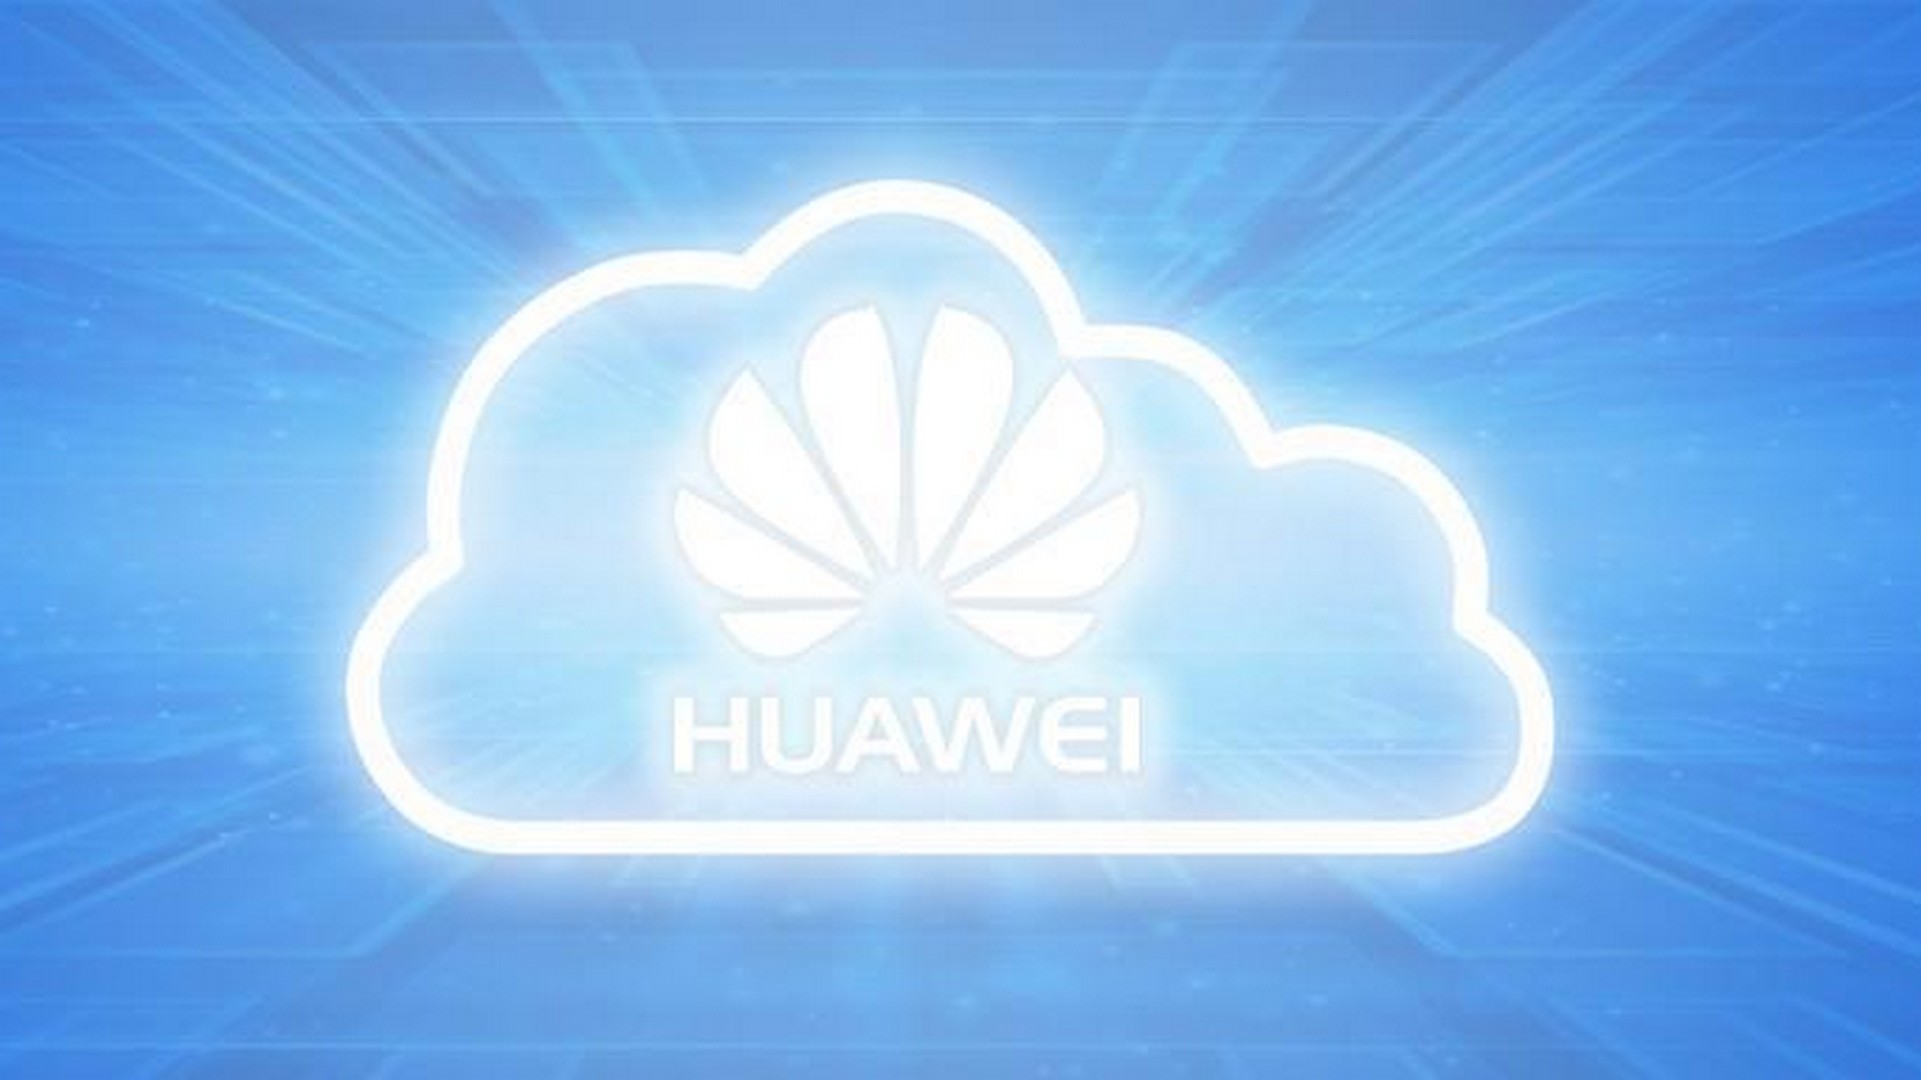 Хуавей Клауд. Облачный Huawei. Облако Хуавей. Huawei cloud logo.